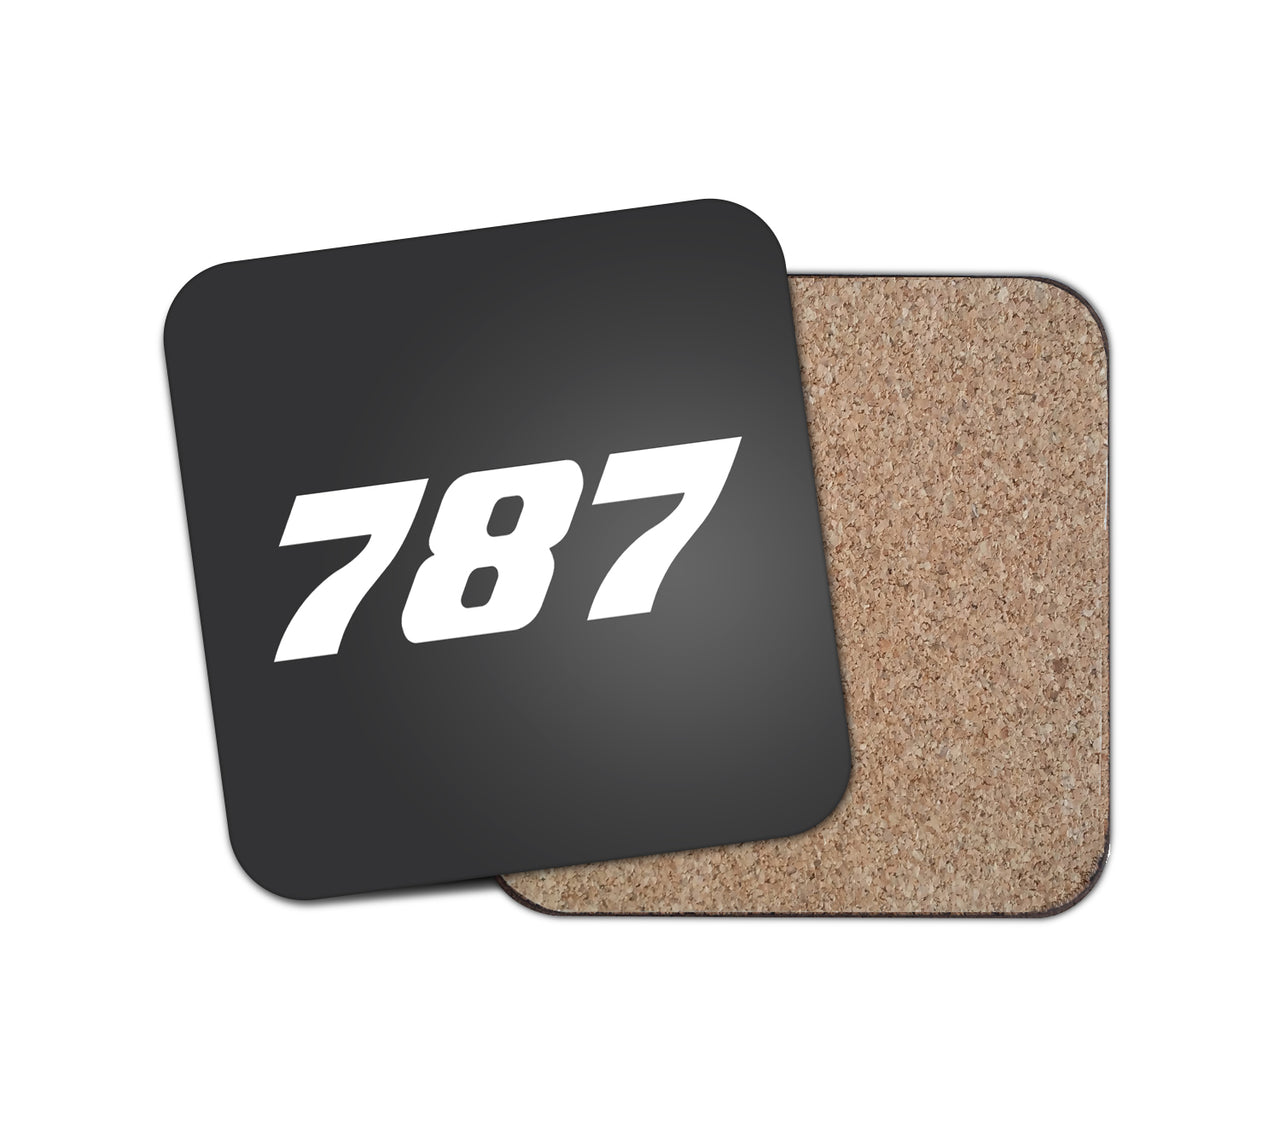 787 Flat Text Designed Coasters